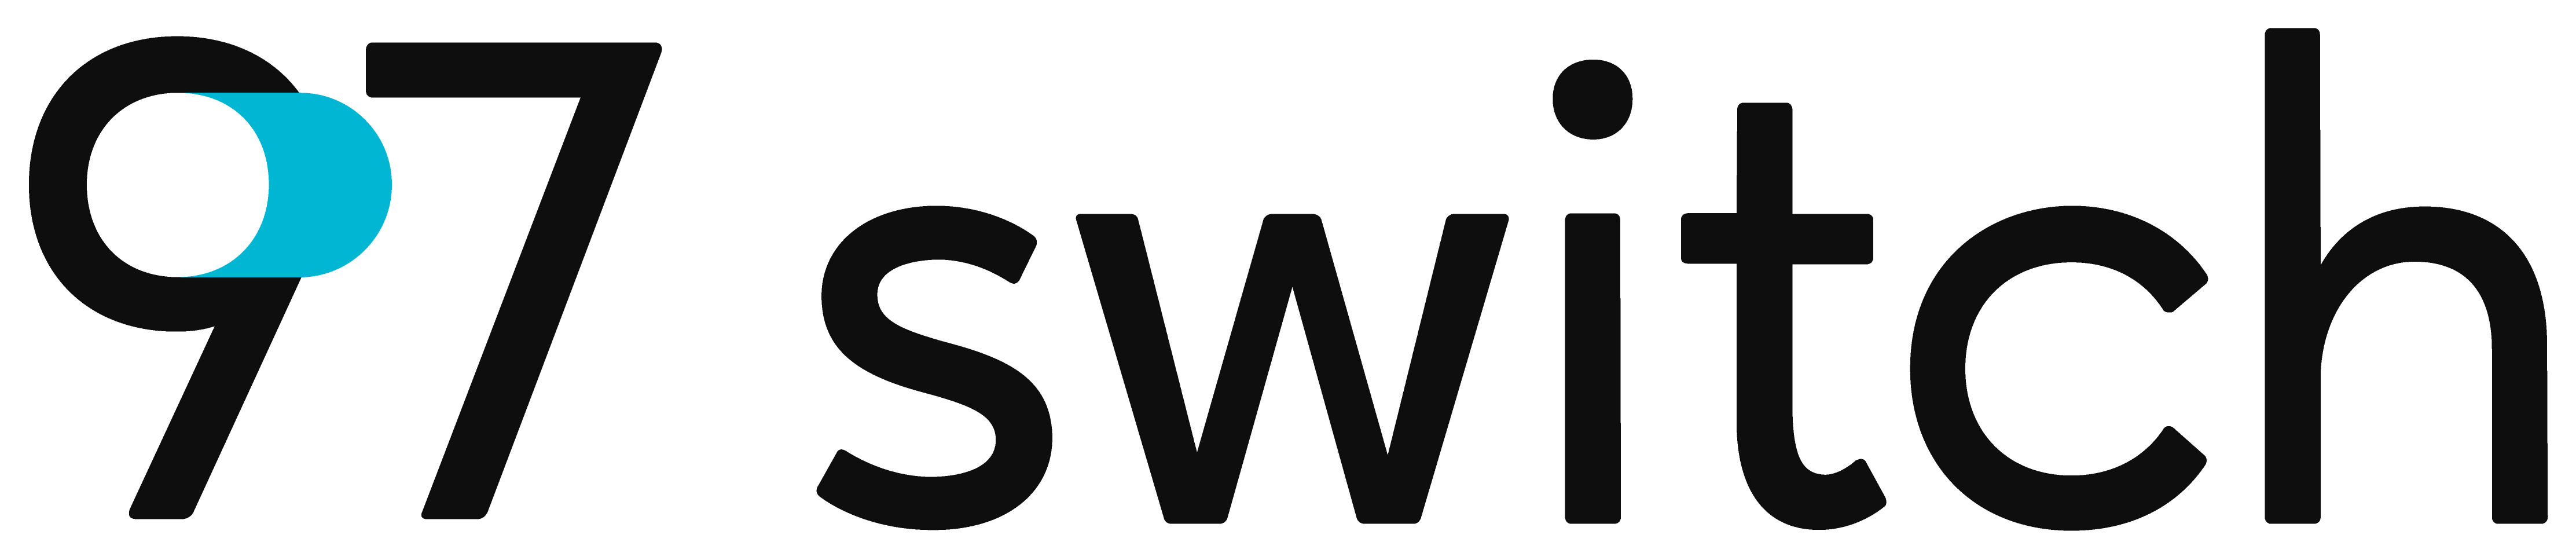 Best BigCommerce Design Firm Logo: 97 Switch